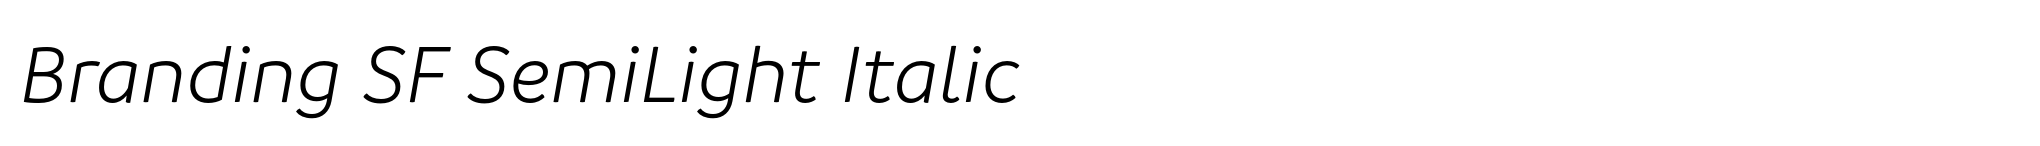 Branding SF SemiLight Italic image